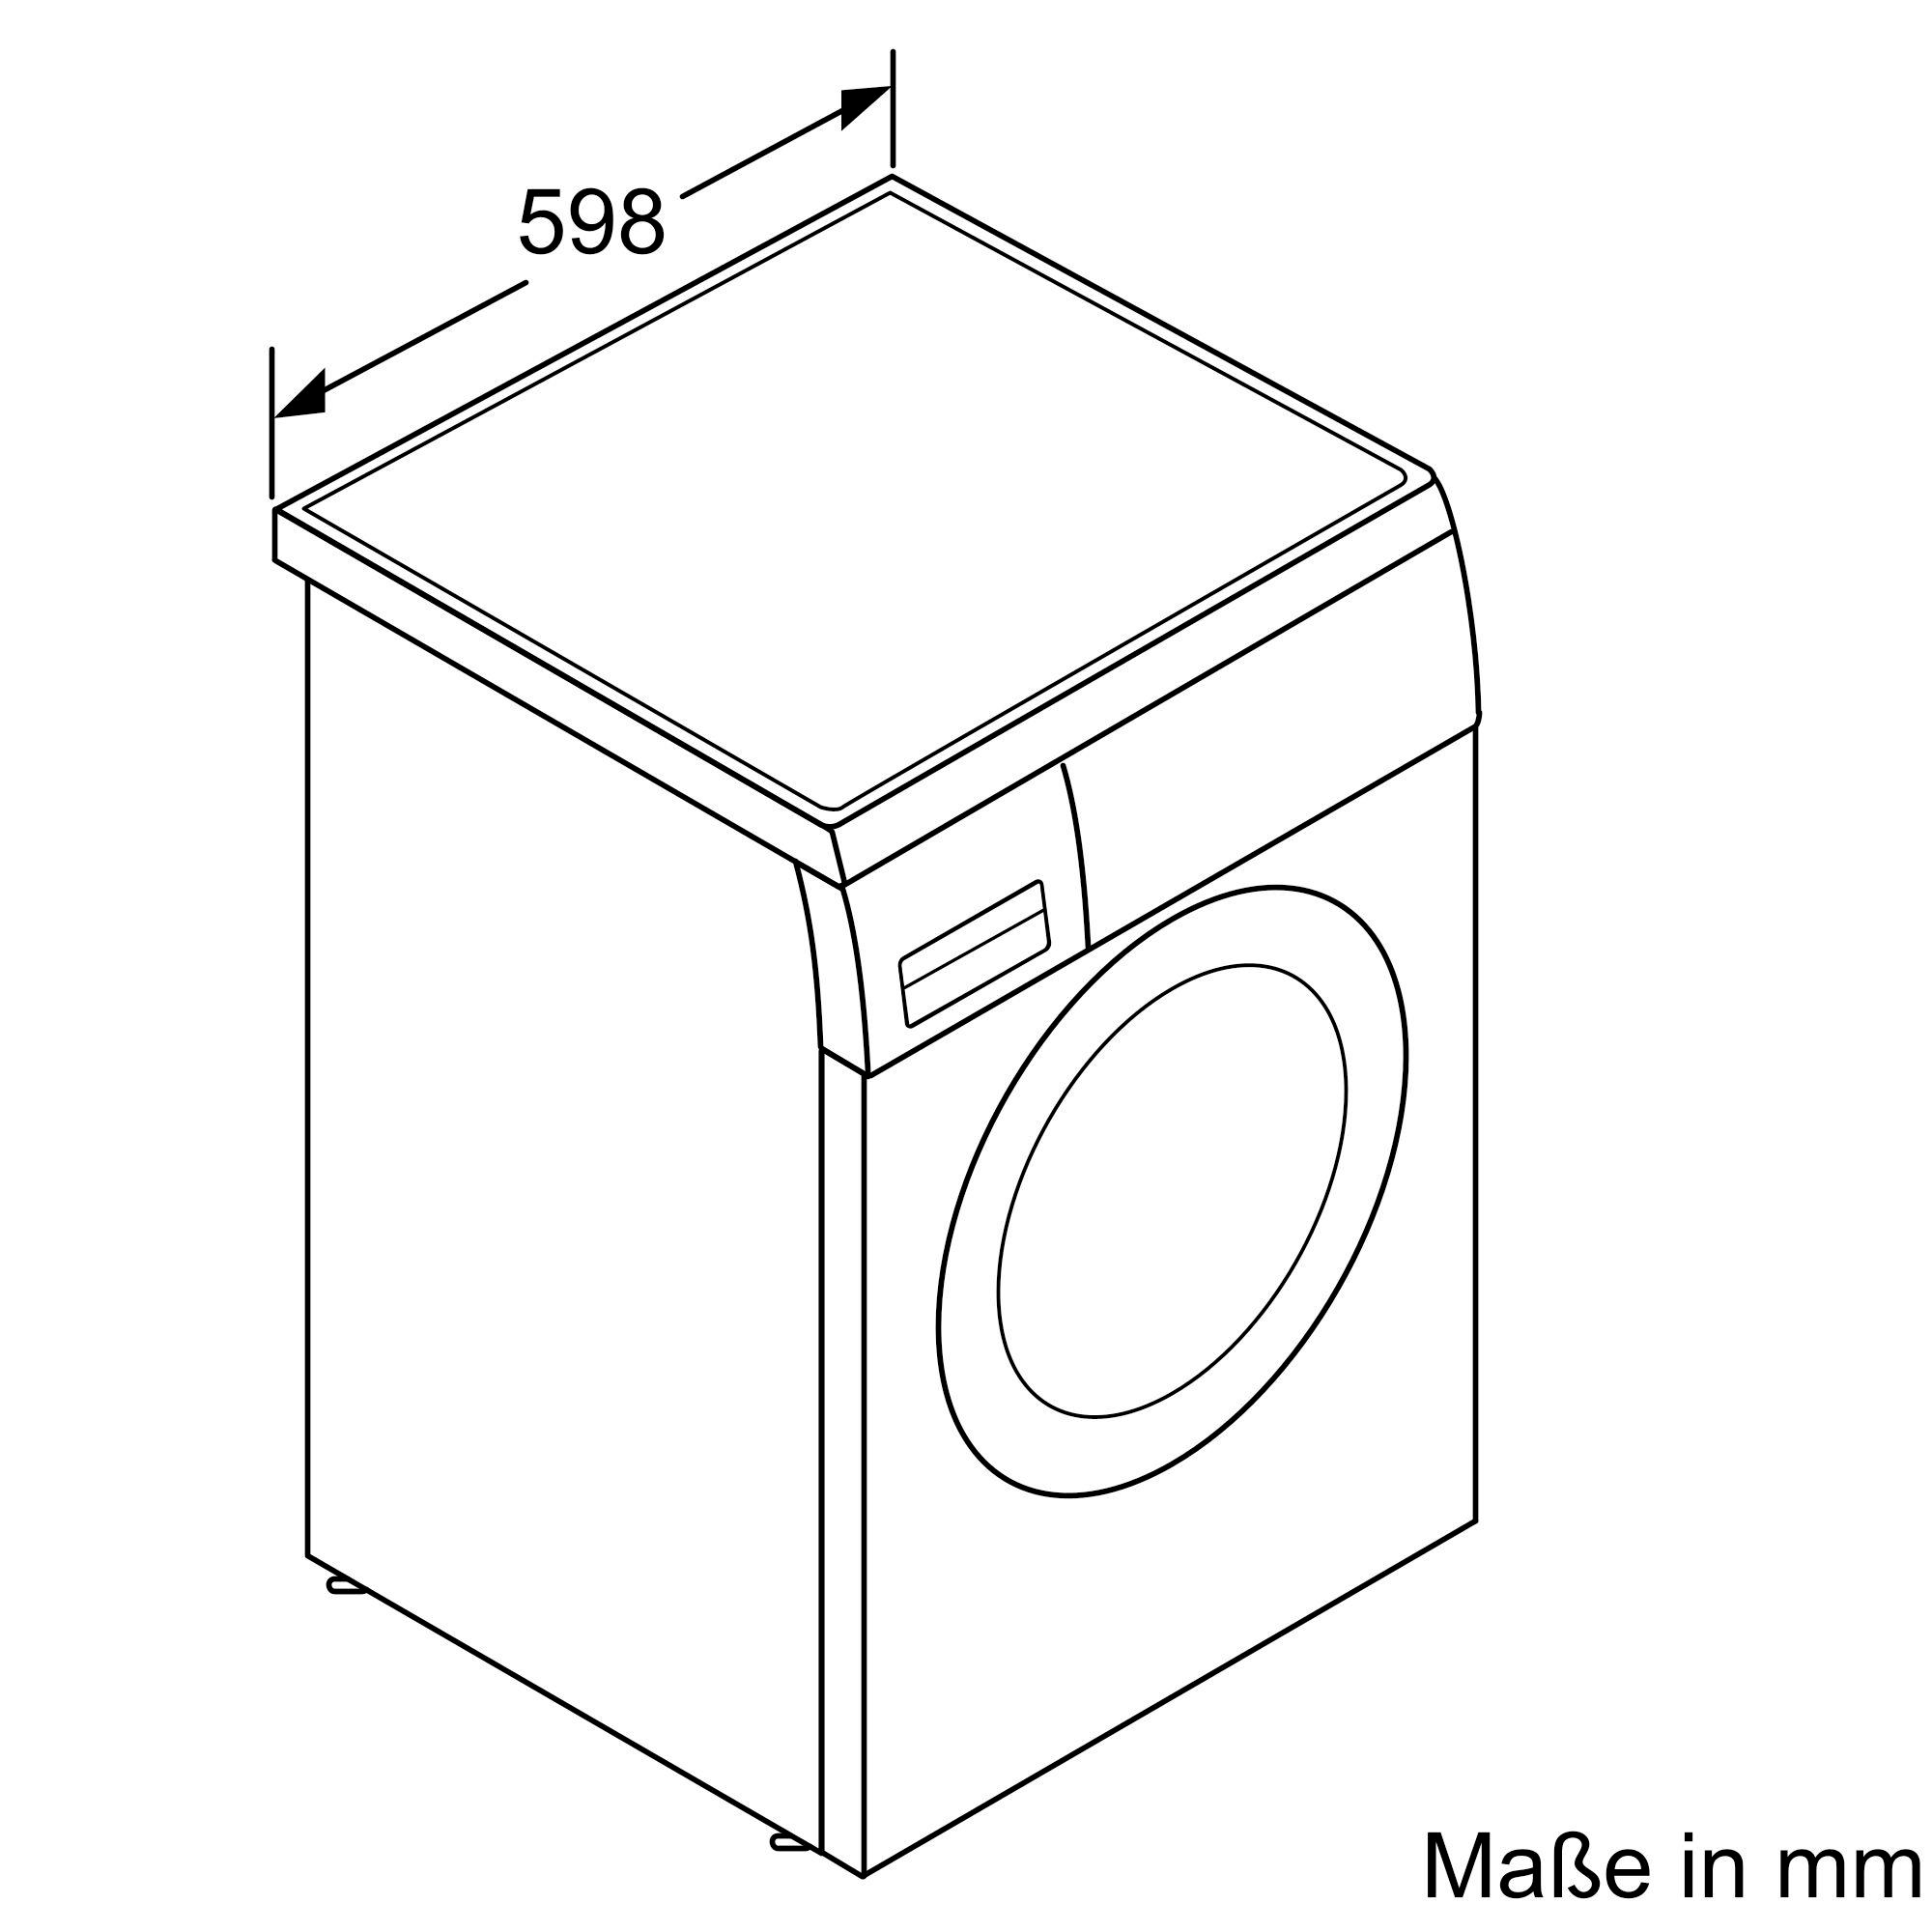 SIEMENS WU14UT41 iQ500 Waschmaschine (9 U/Min., A) kg, 1351